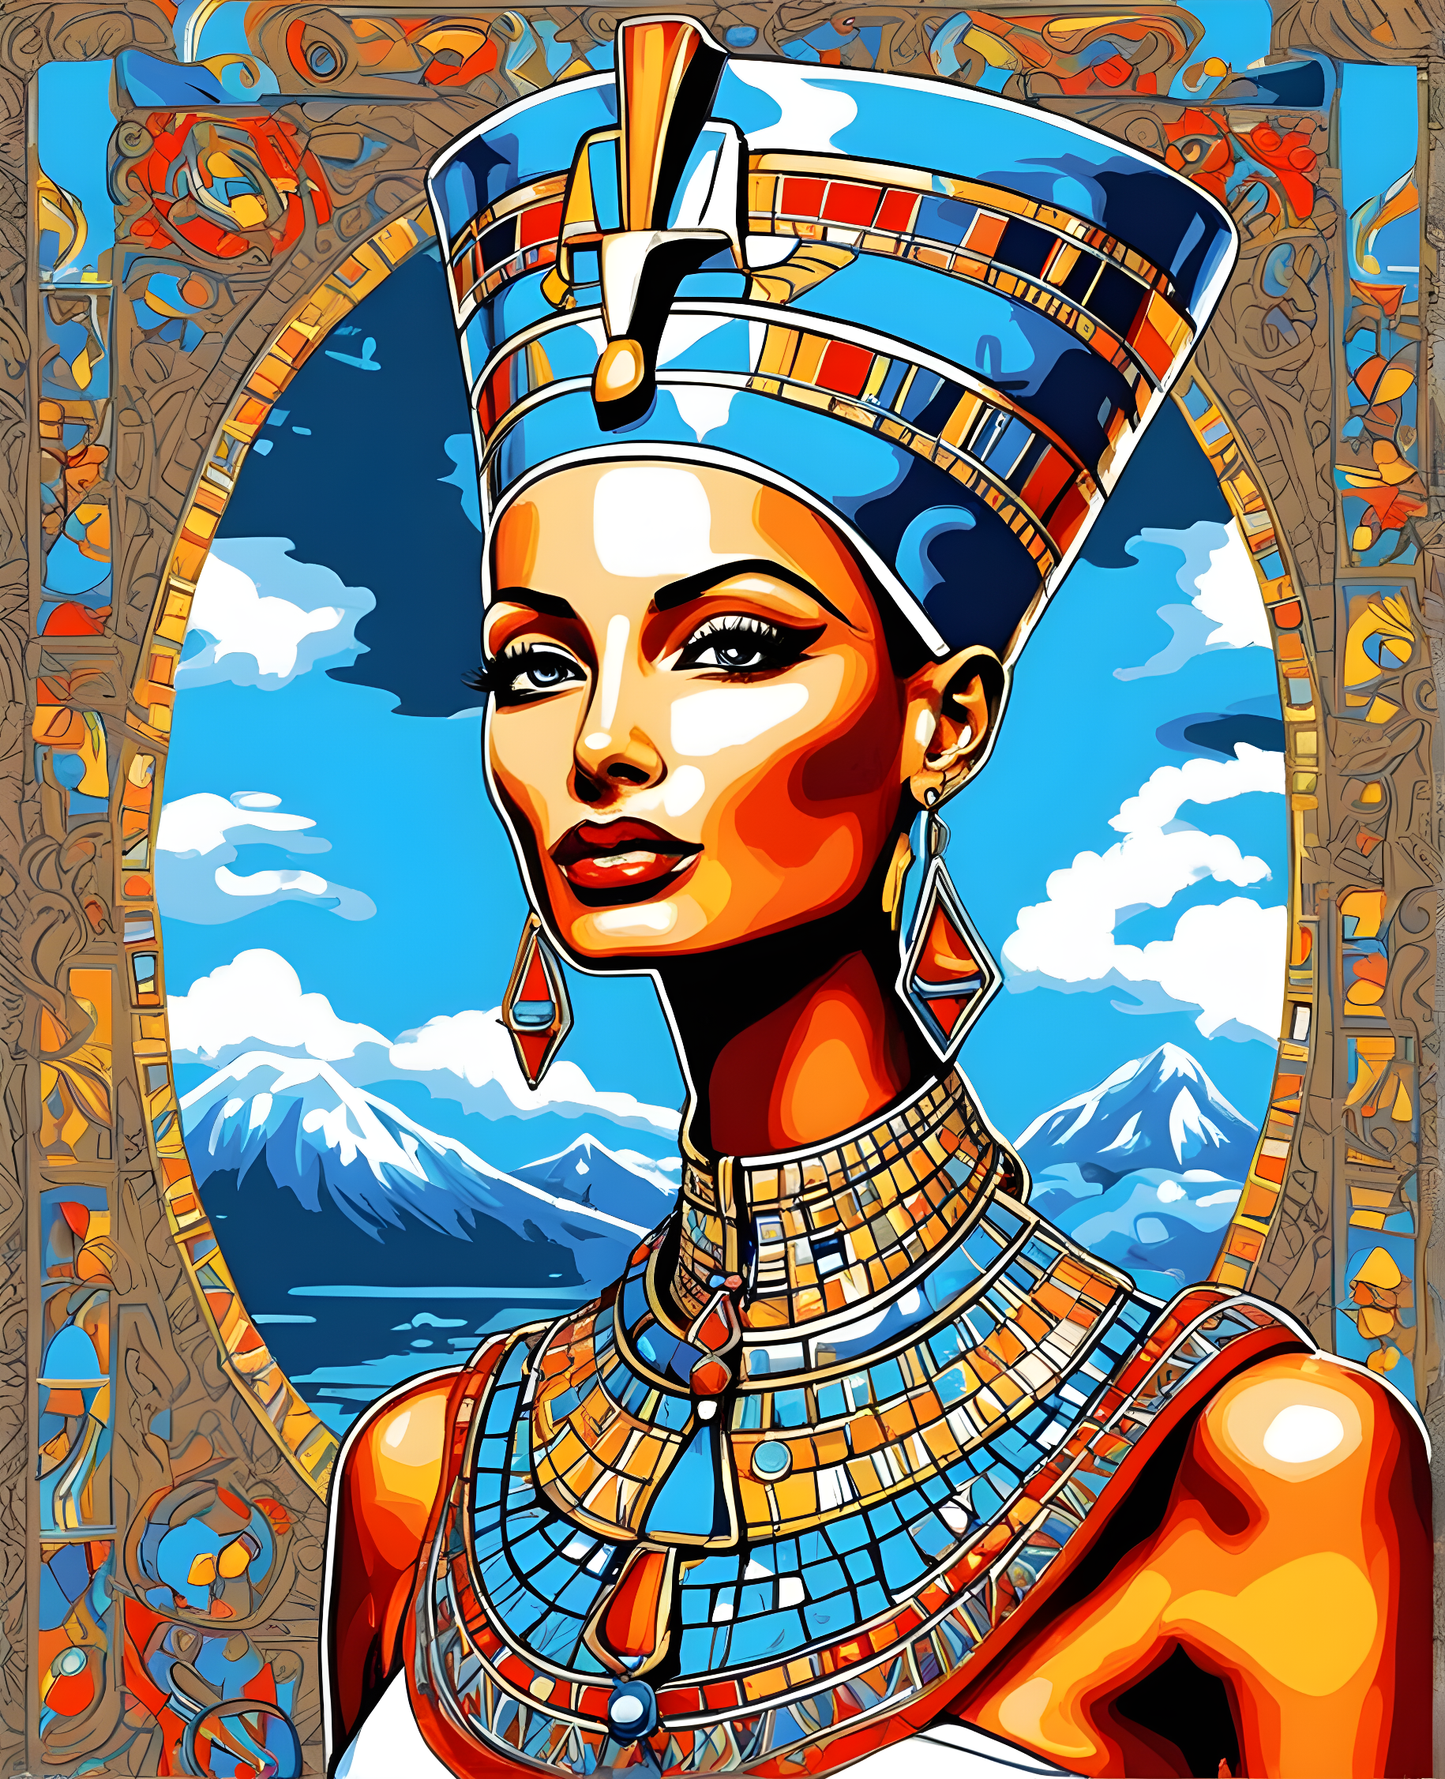 Nefertiti (4) - Van-Go Paint-By-Number Kit